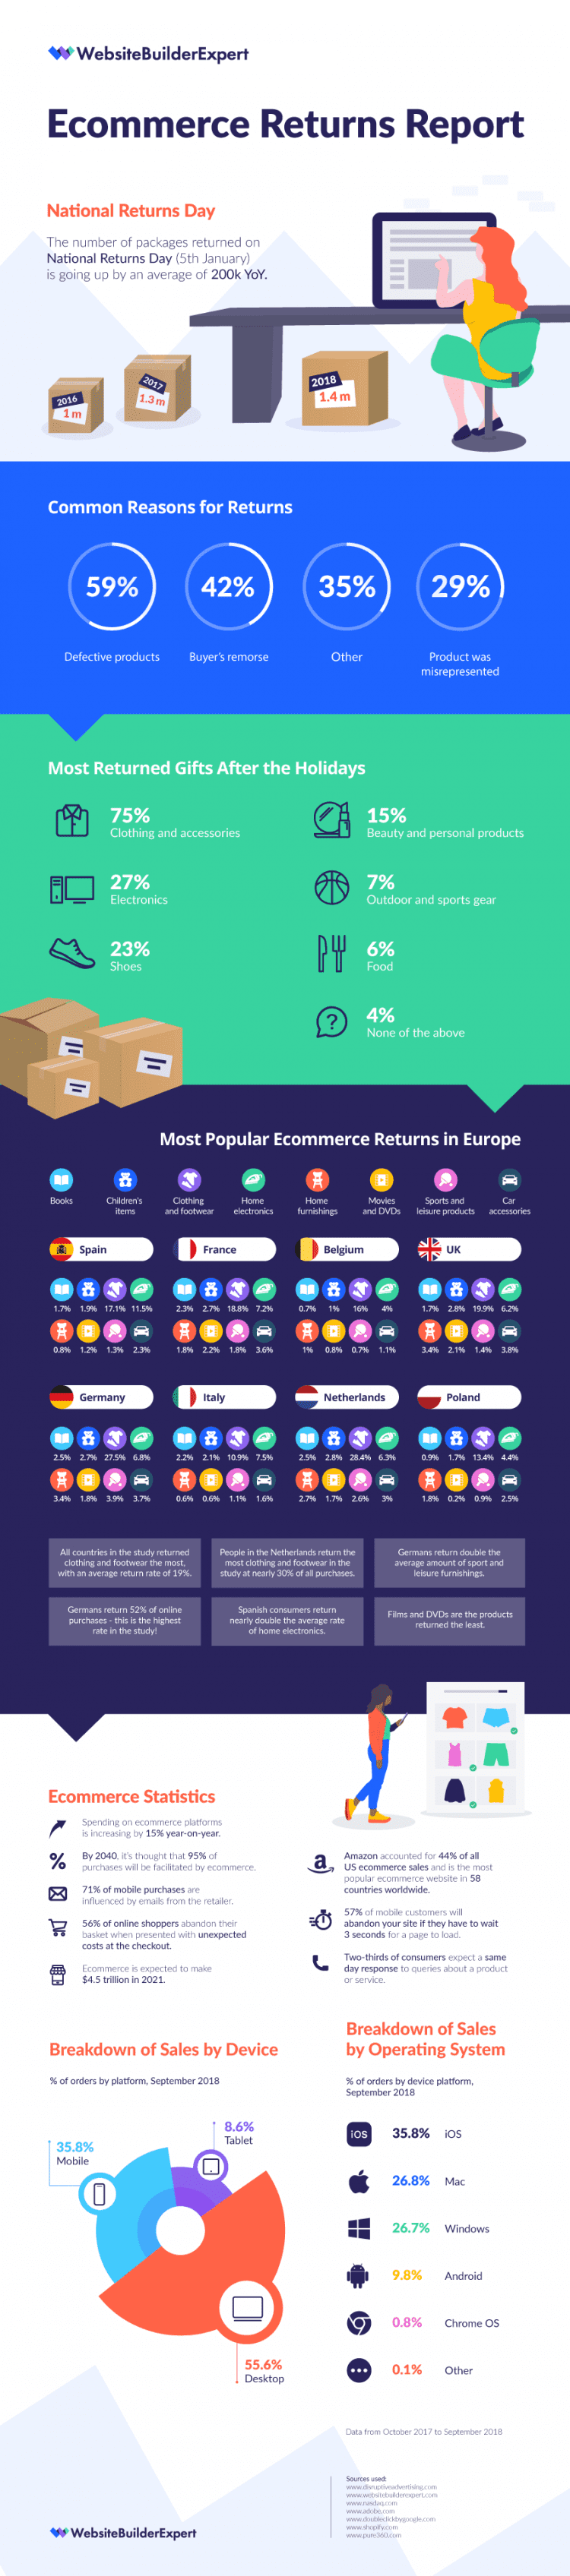 ecommerce-return-statistics-infographic